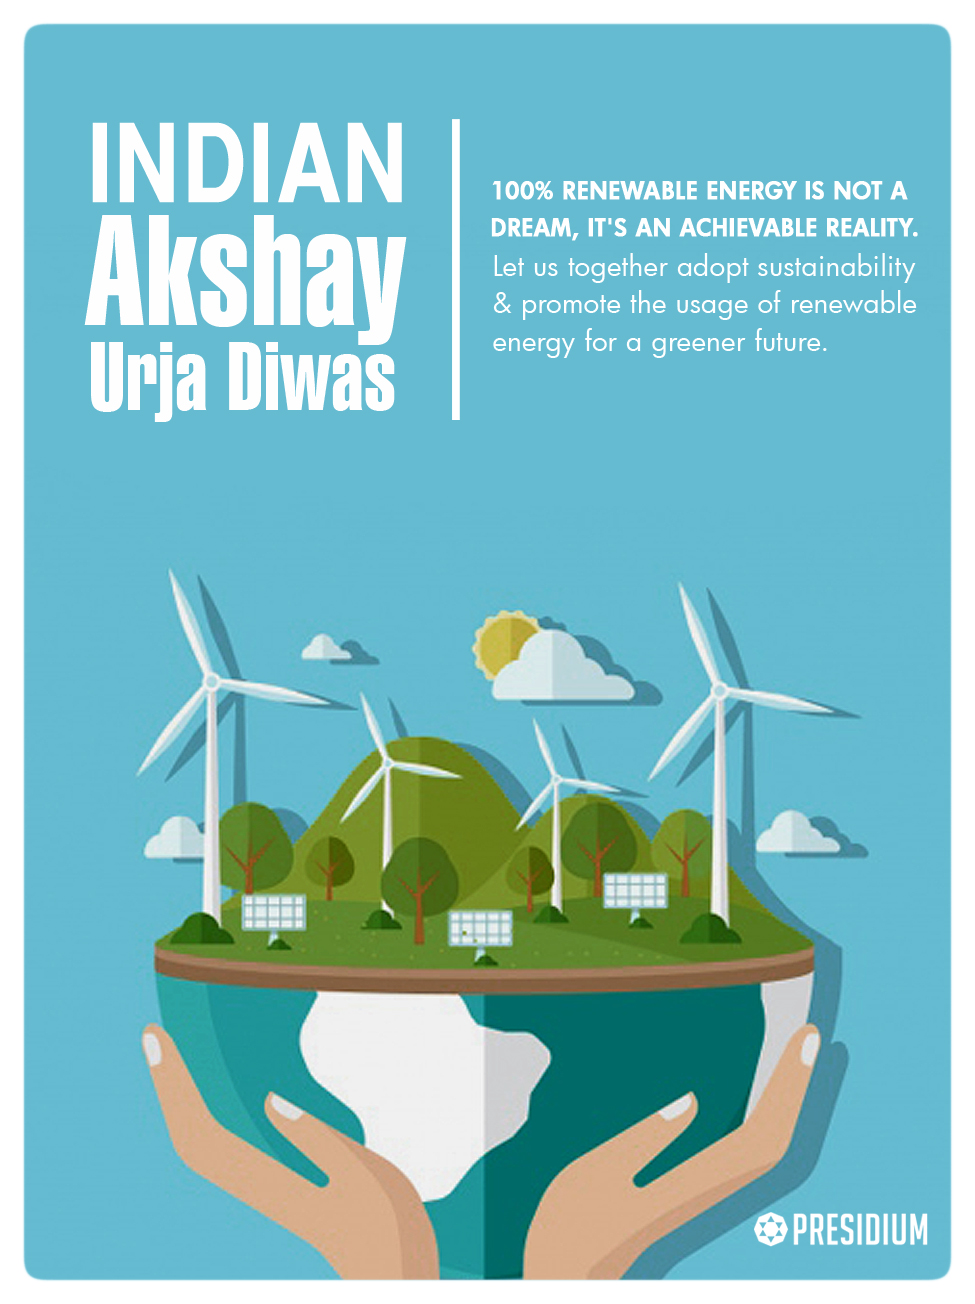 ON INDIAN AKSHAY URJA DIWAS,PROMOTE THE USAGE OF RENEWABLE ENERGY